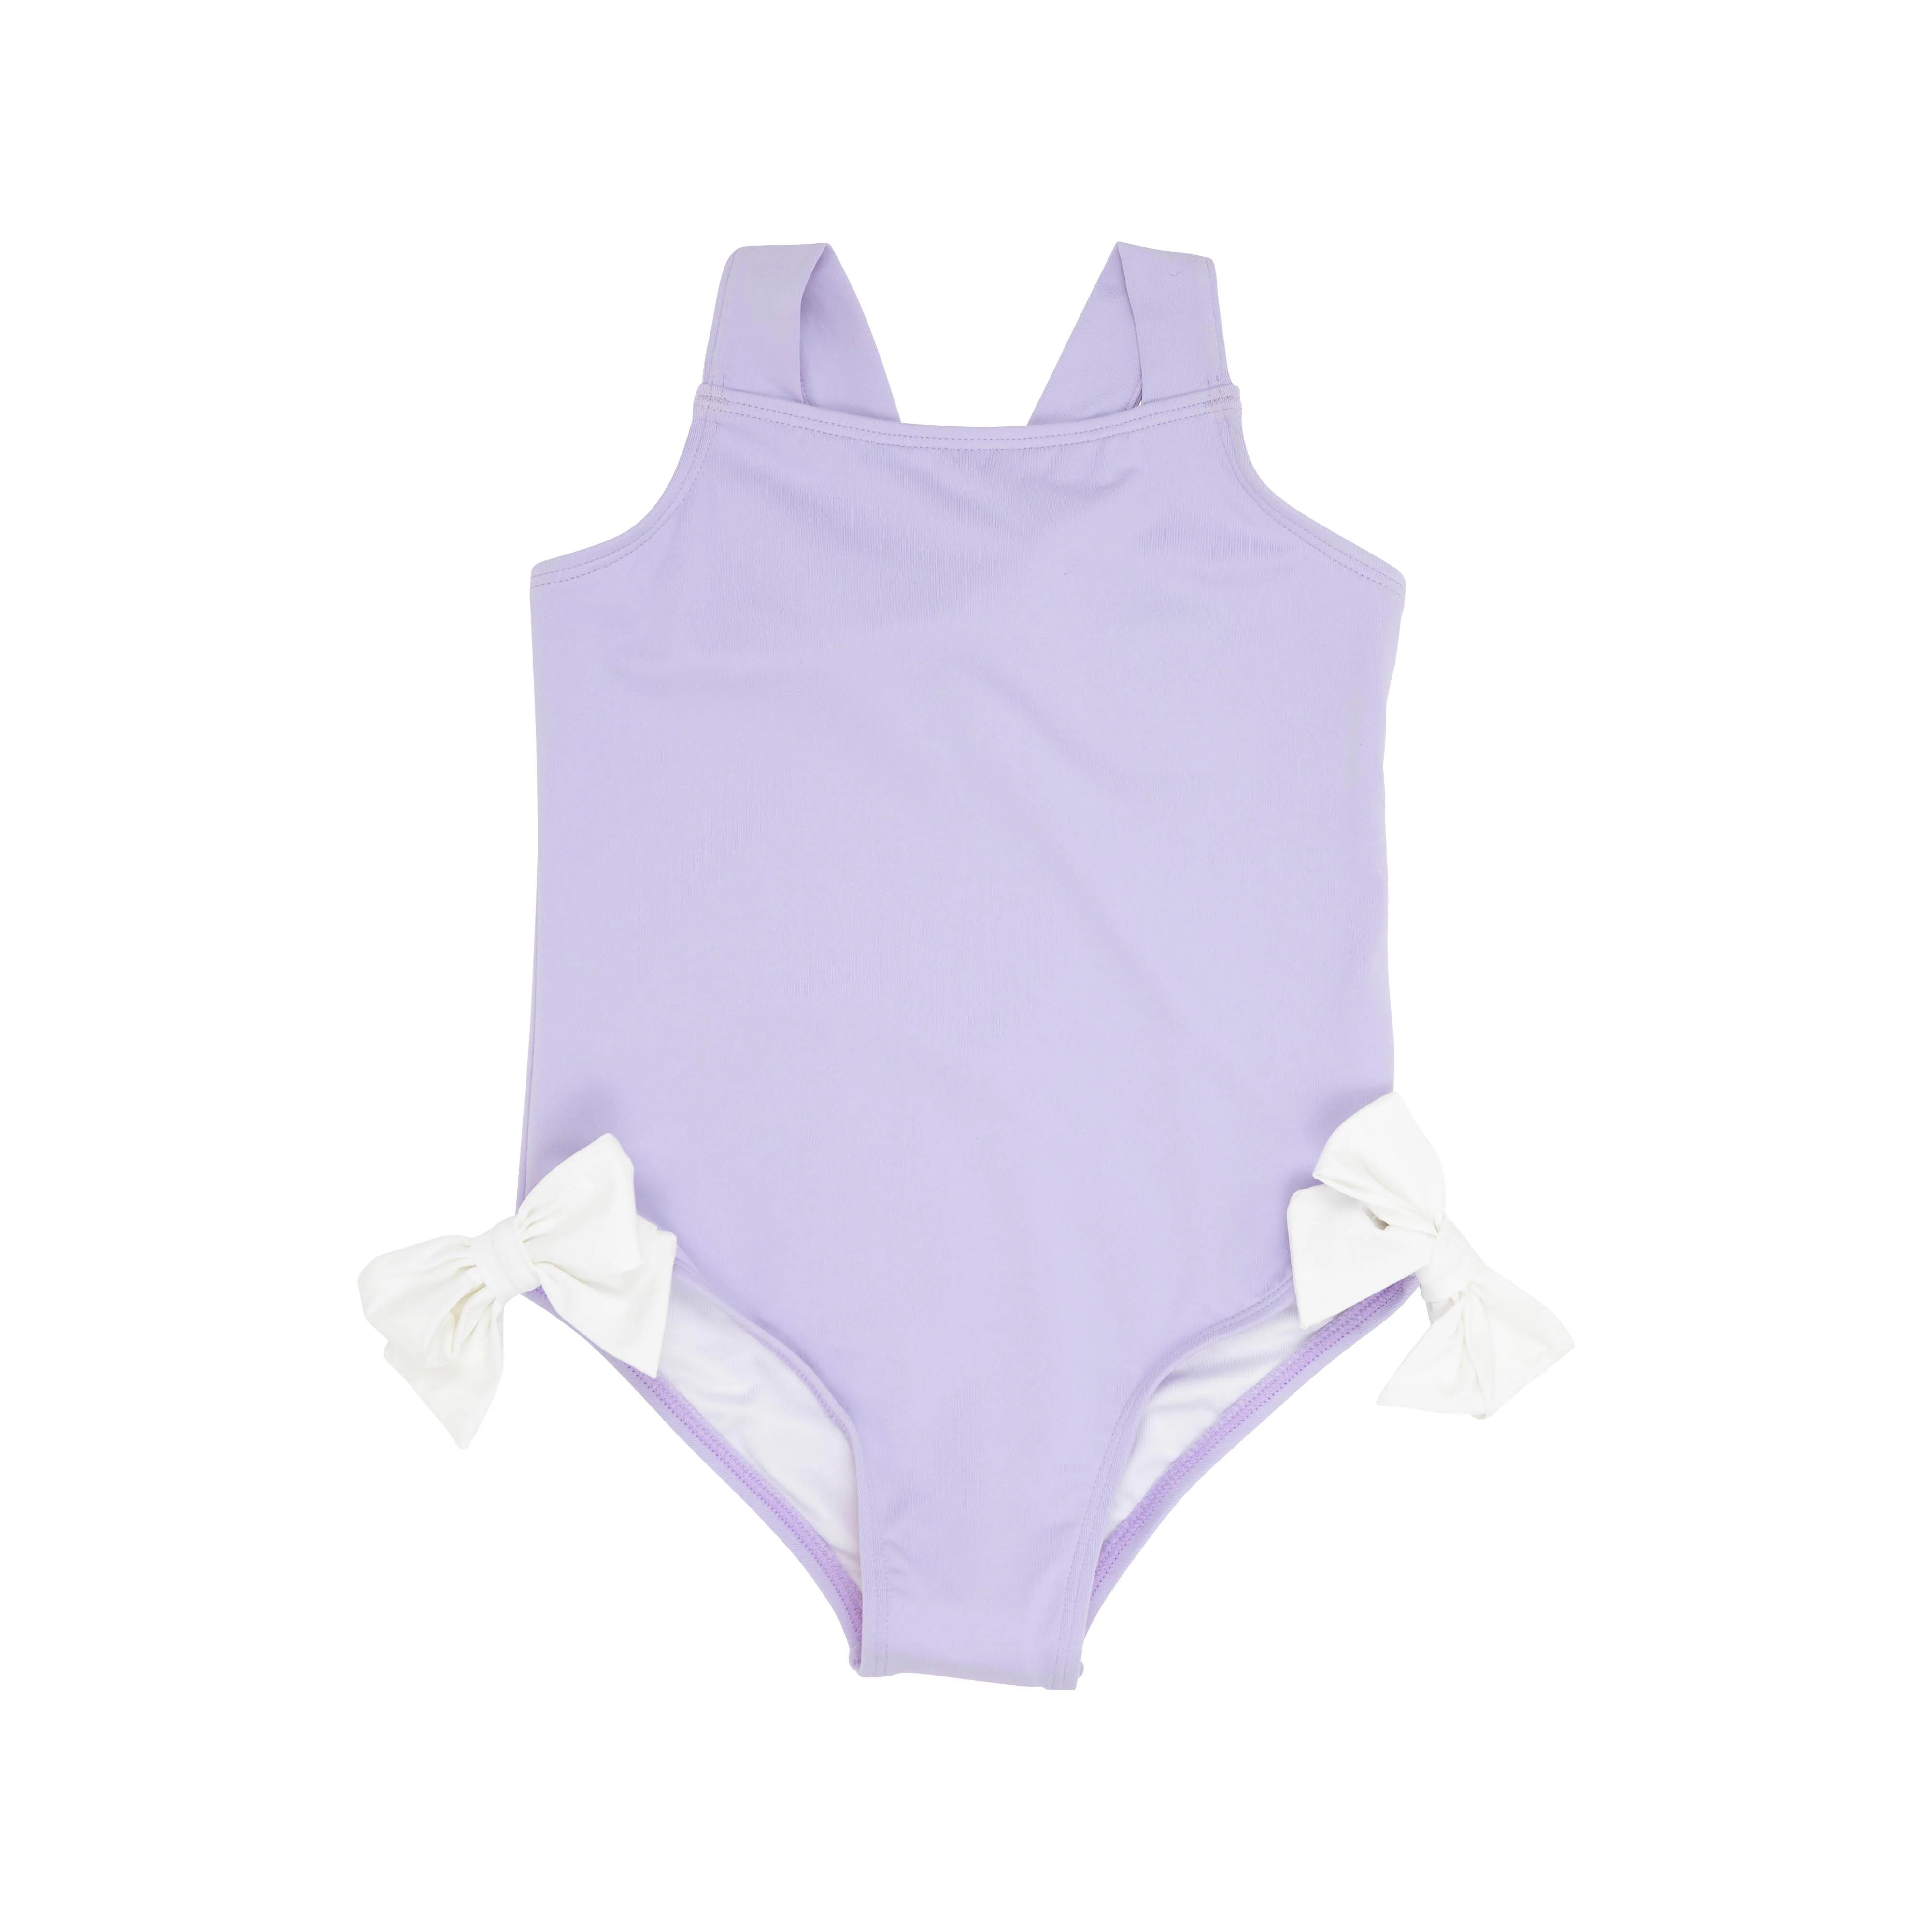 Laguna Beach Bathing Suit - Lauderdale Lavender with Worth Avenue White | The Beaufort Bonnet Company